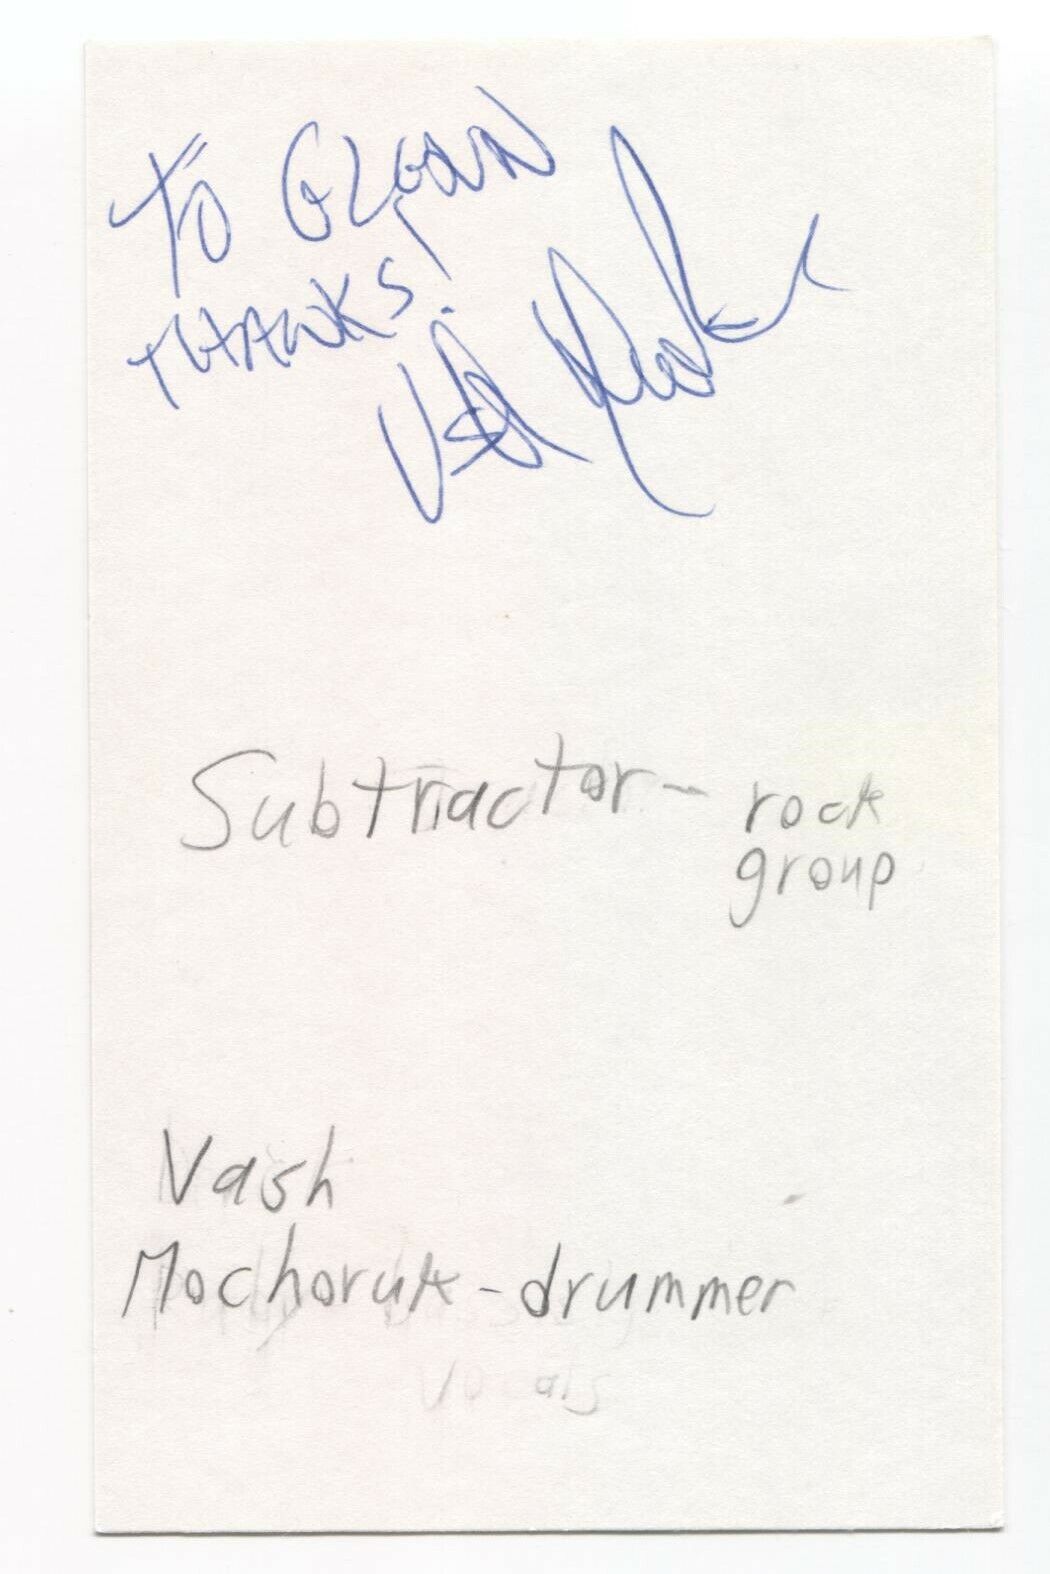 Subtractor - Vash Mochoruk Signed 3x5 Index Card Autographed Signature